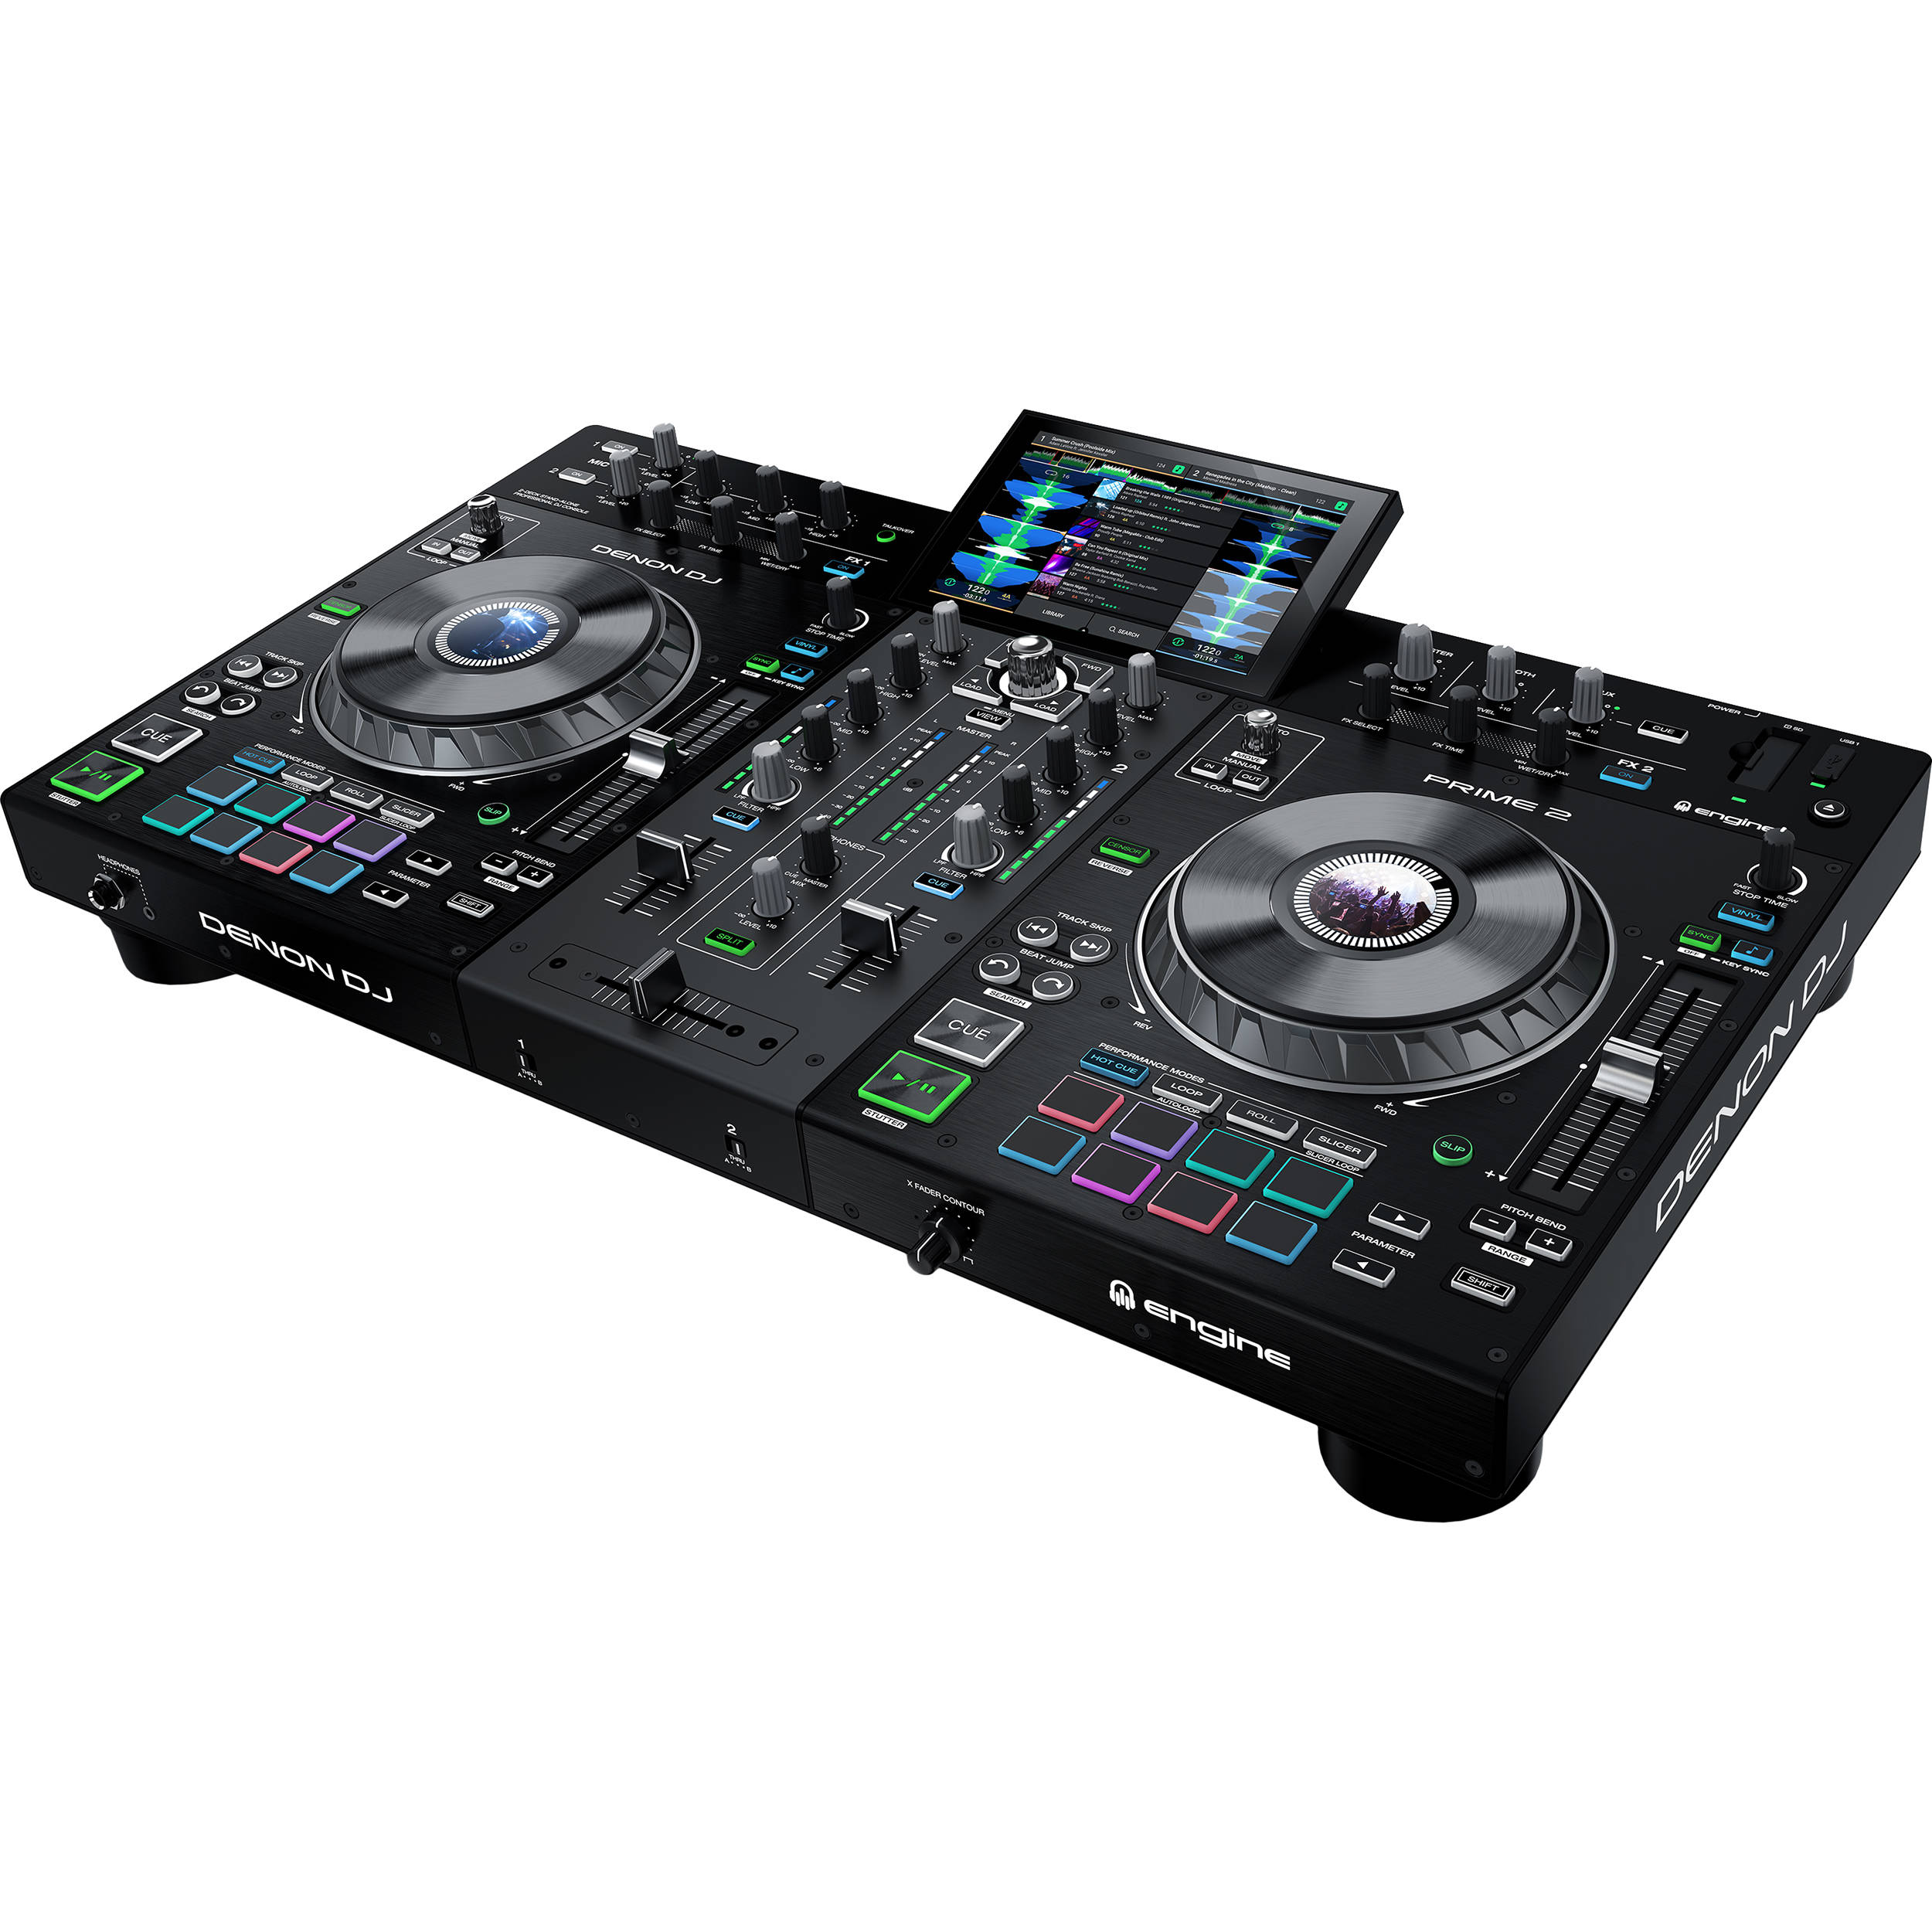 Denon DJ Prime 2 Standalone DJ System with Touchscreen